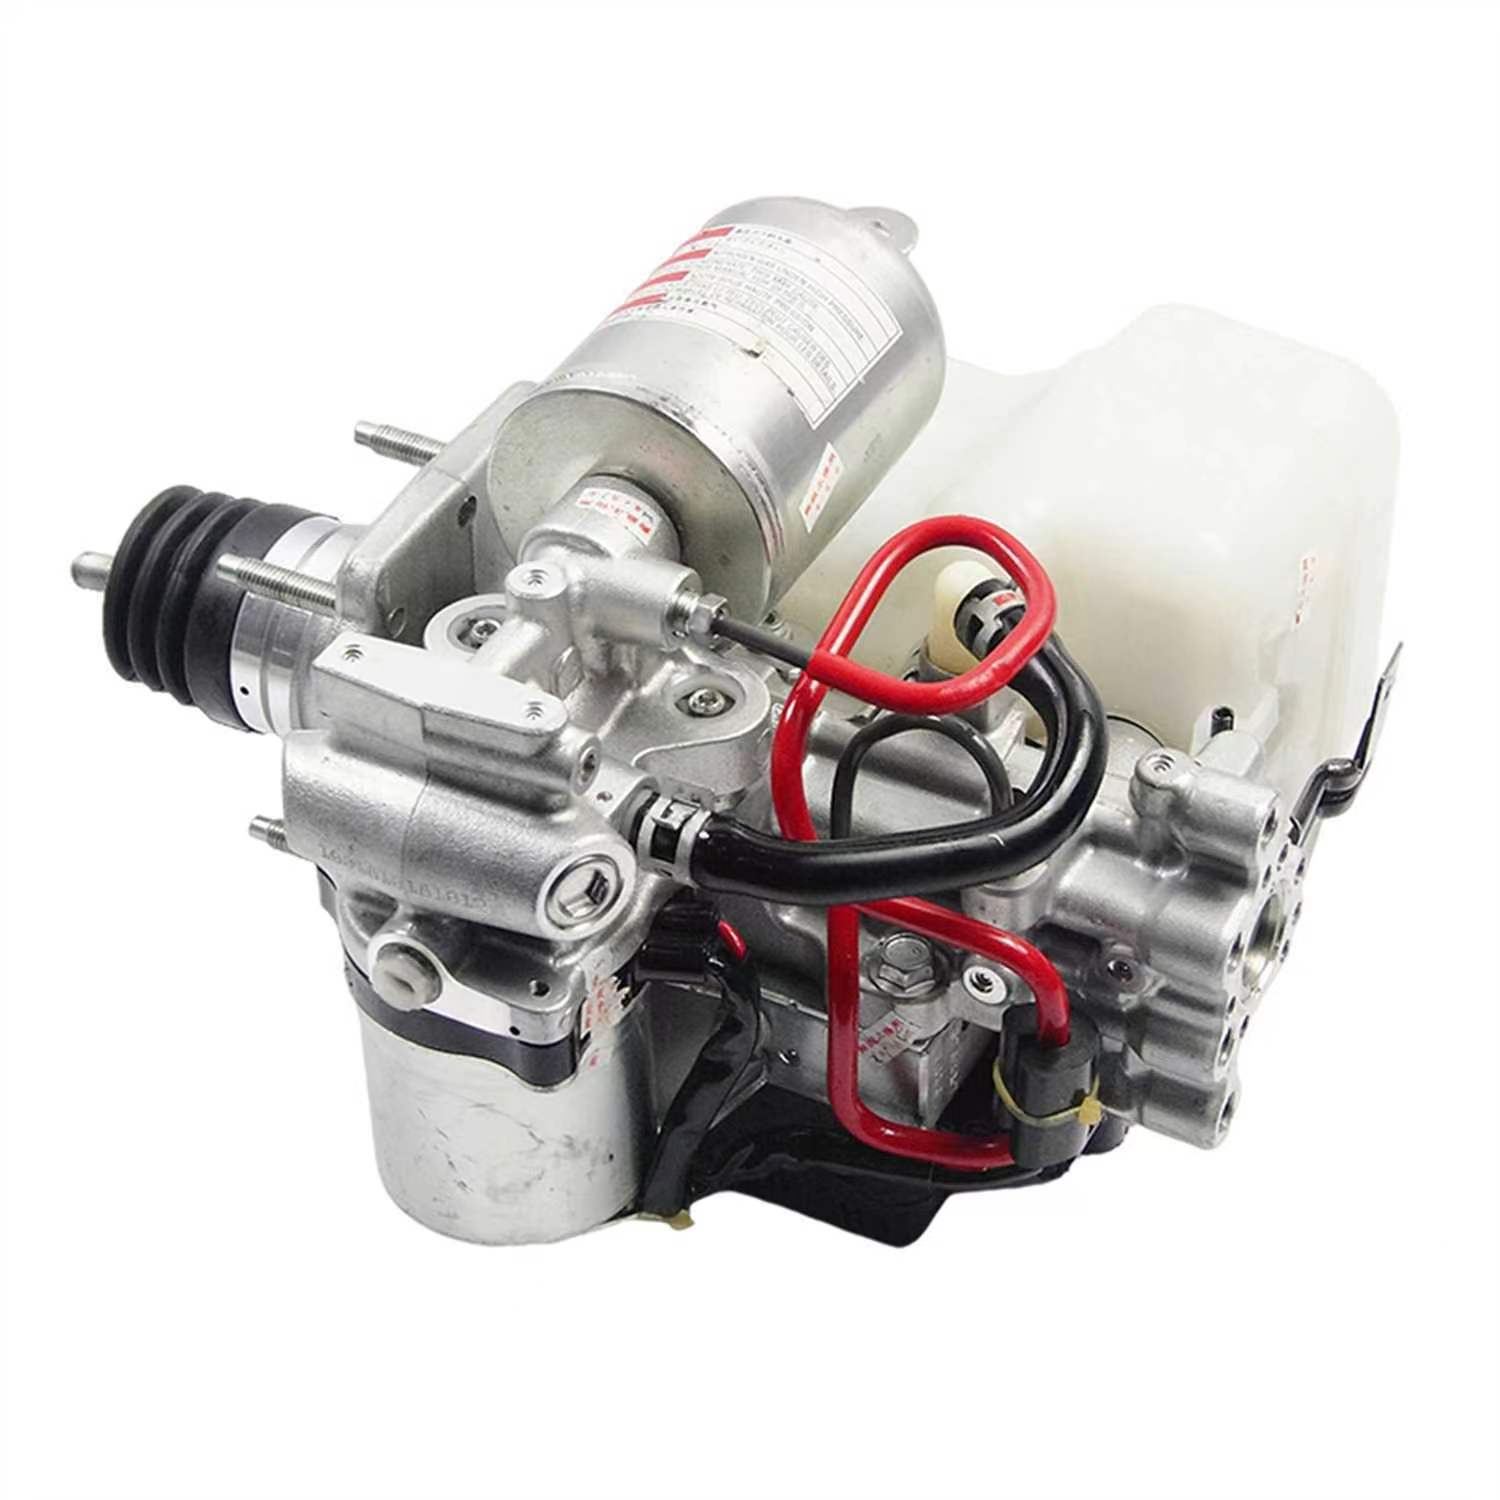 diesel fuel injector,yanmar fuel injection pump,spray diesel injector nozzle,delivery valves for fuel pump